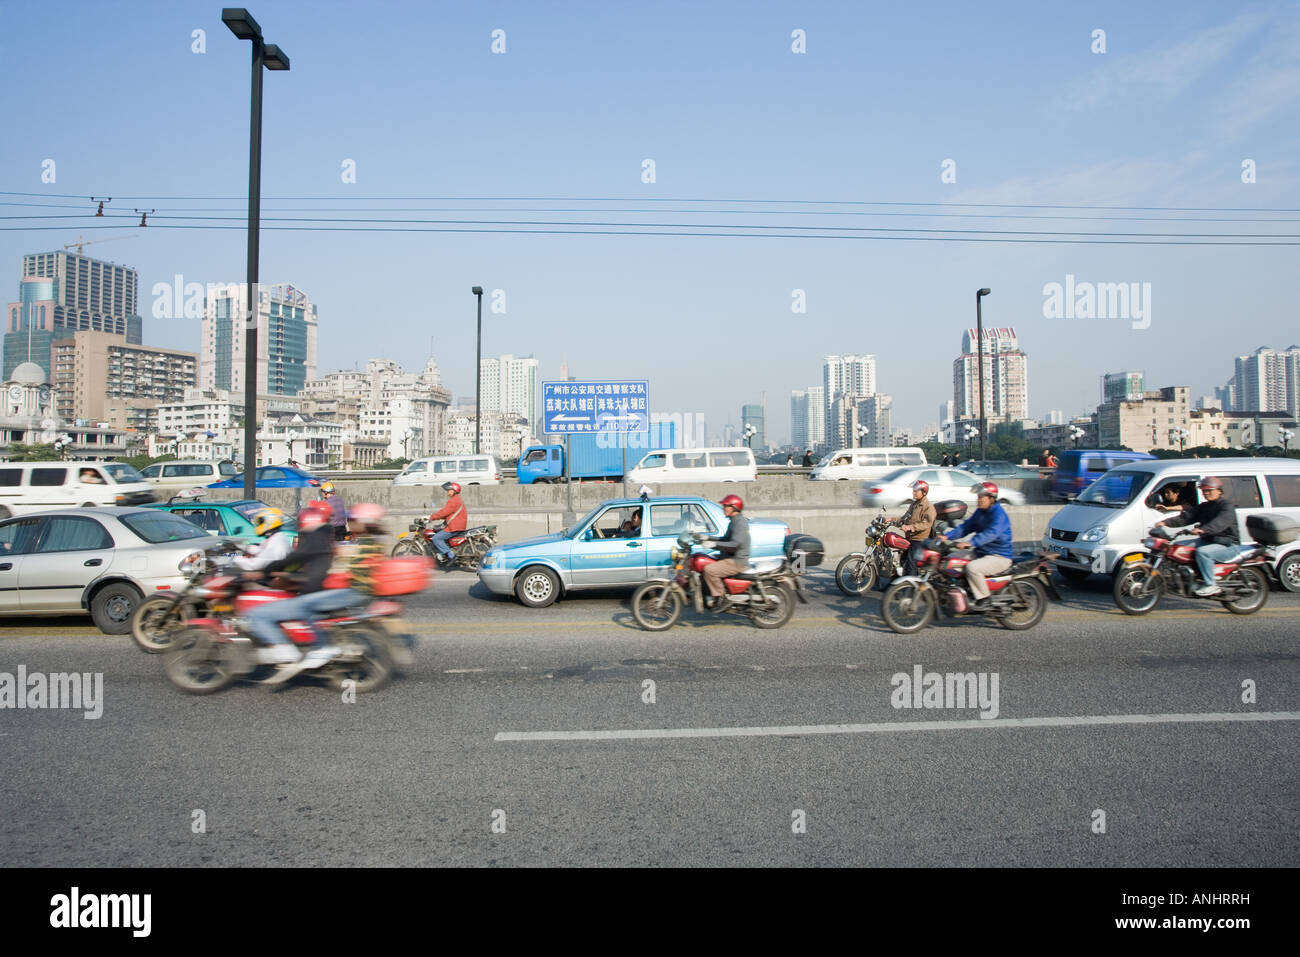 Traffic on city thoroughfare, China Stock Photo